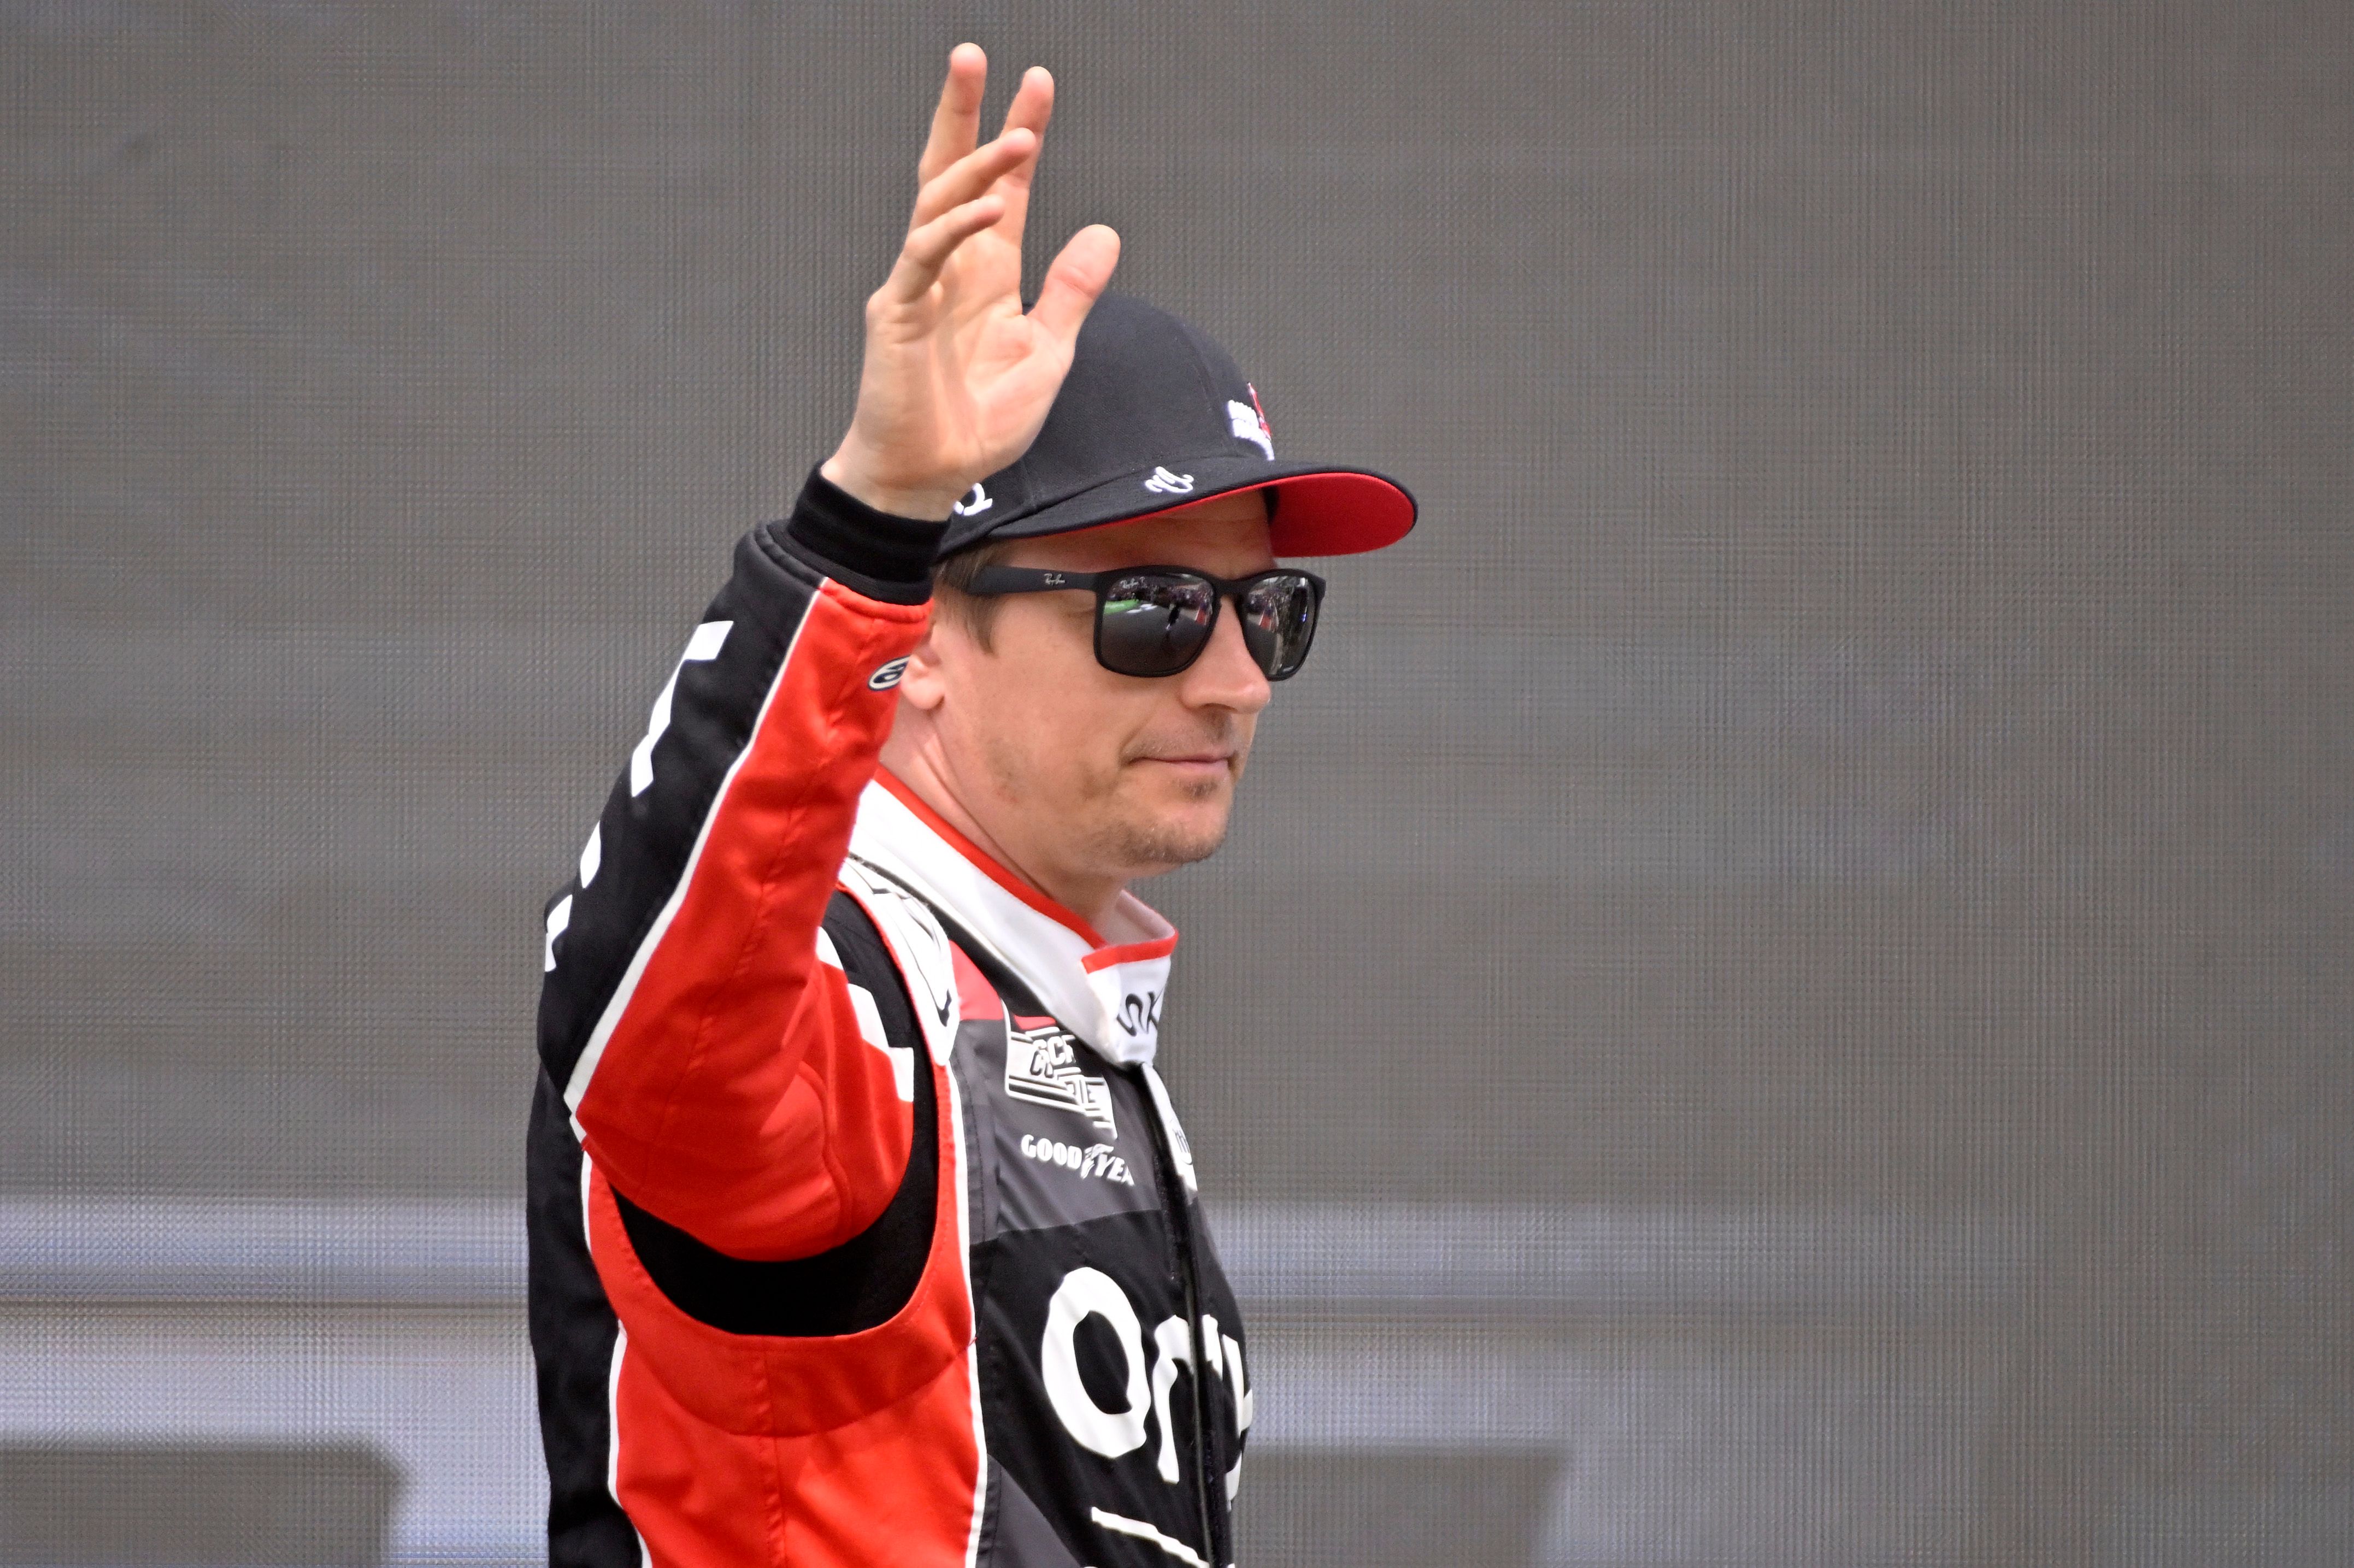 Kimi Raikkonen waves at the latest NASCAR round in Austin